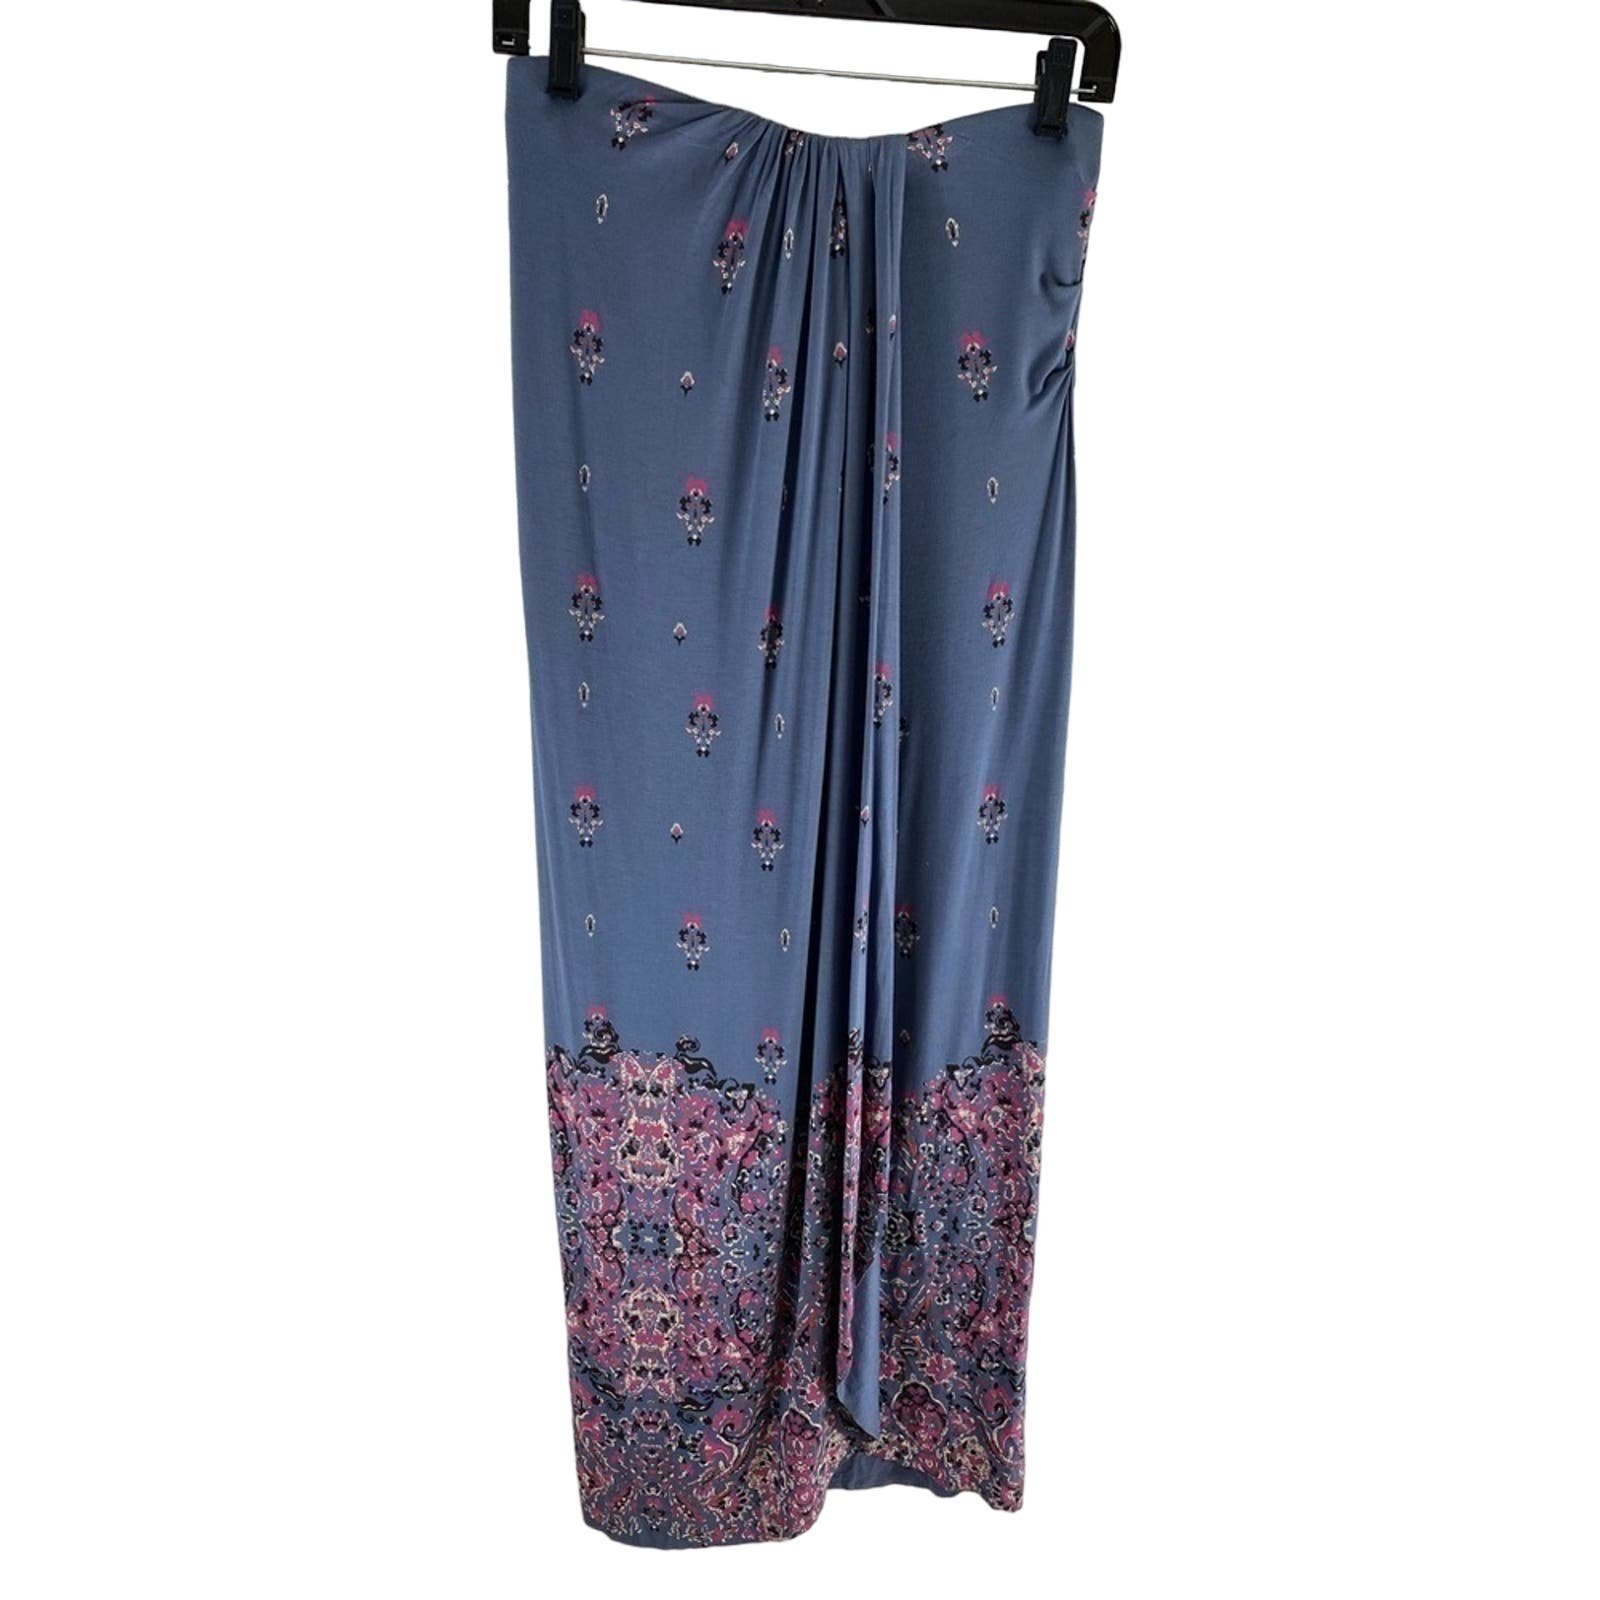 Buy Cynthia Rowley NWT Blue Faux Wrap Jersey Knit Maxi Skirt Pink Floral Print Sz S mYSMG5V83 no tax